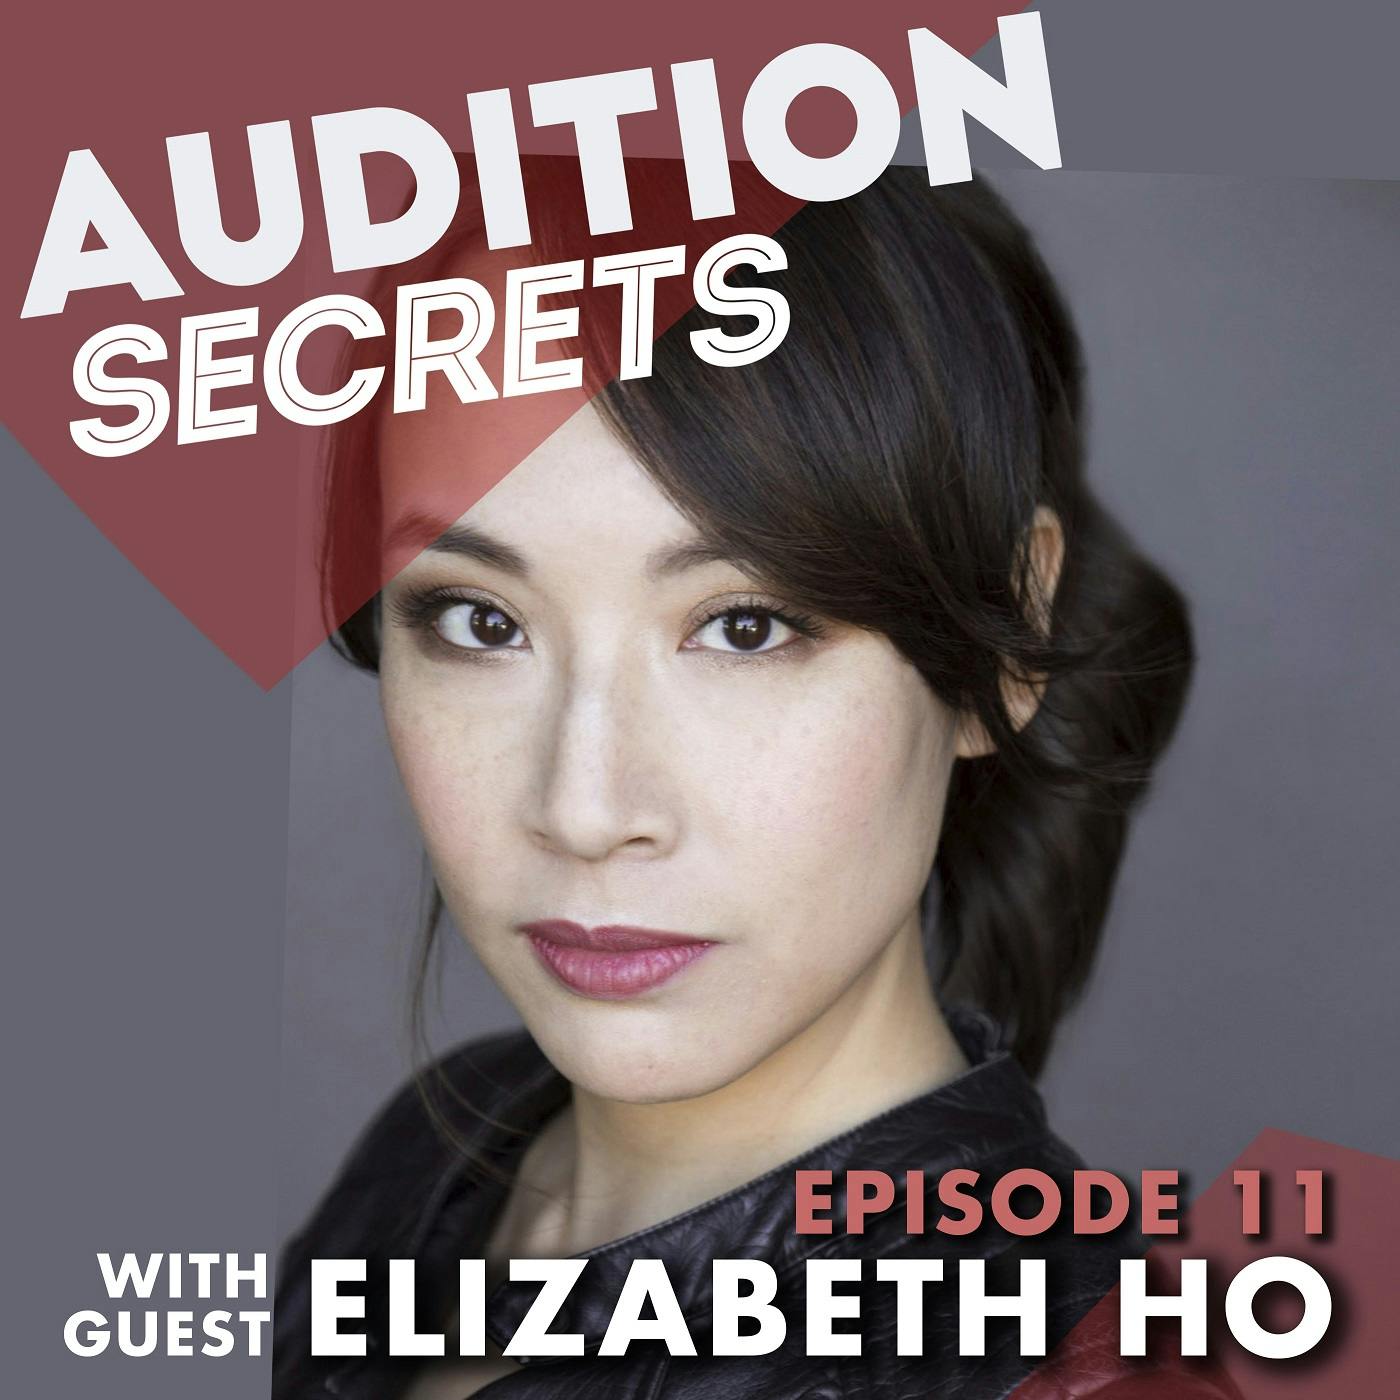 Elizabeth Ho is Letting it Go